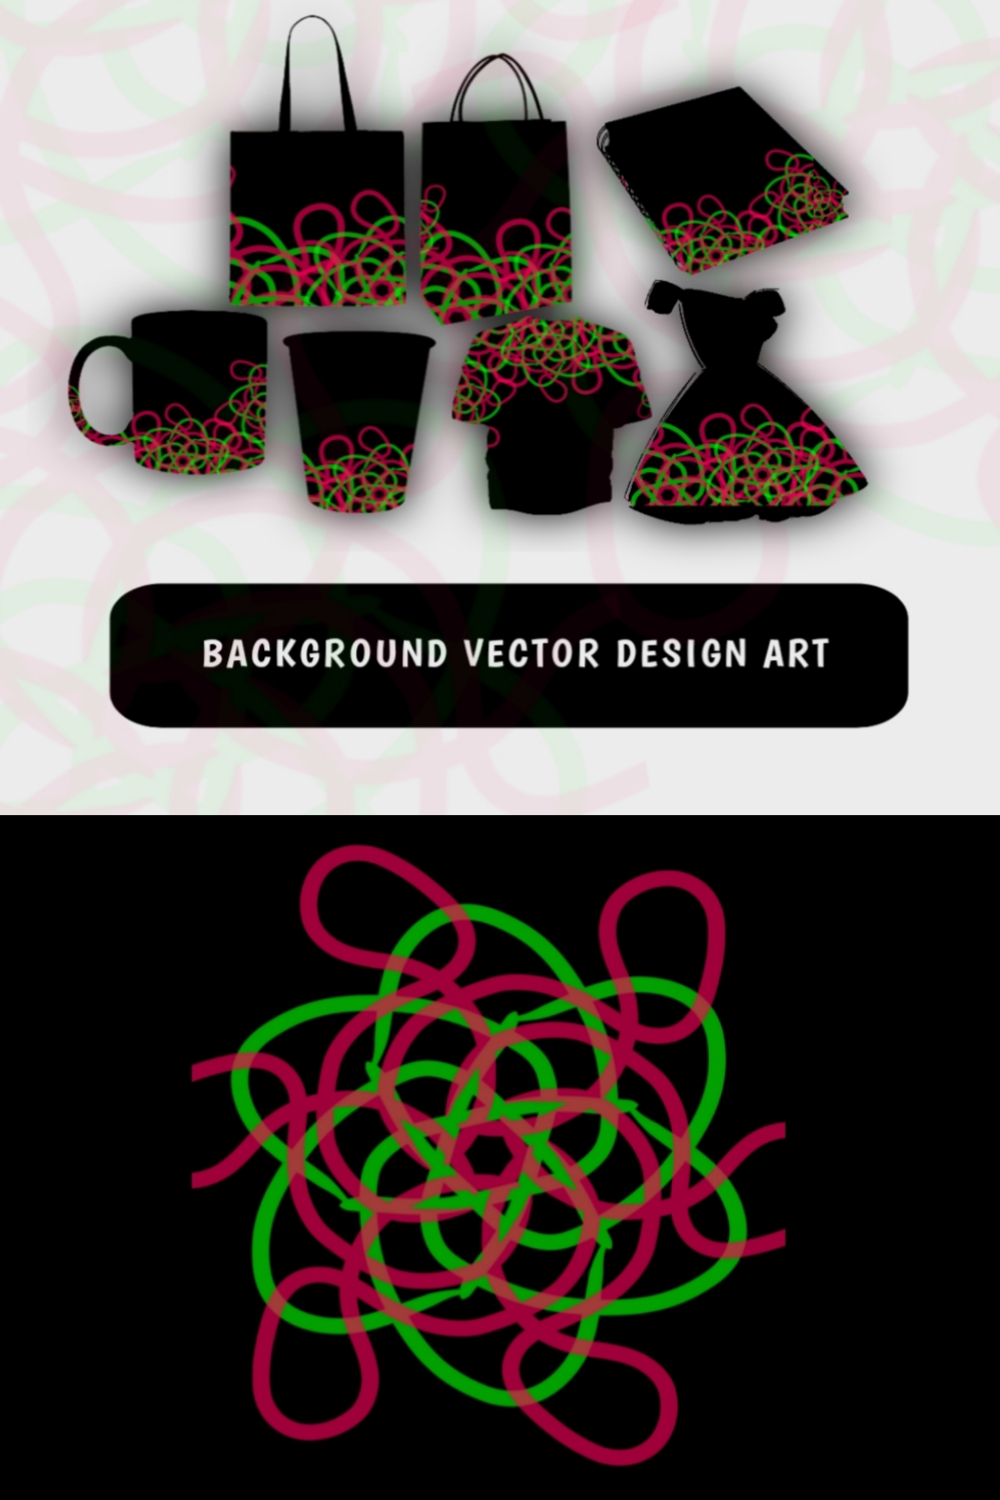 Background vector design art pinterest preview image.